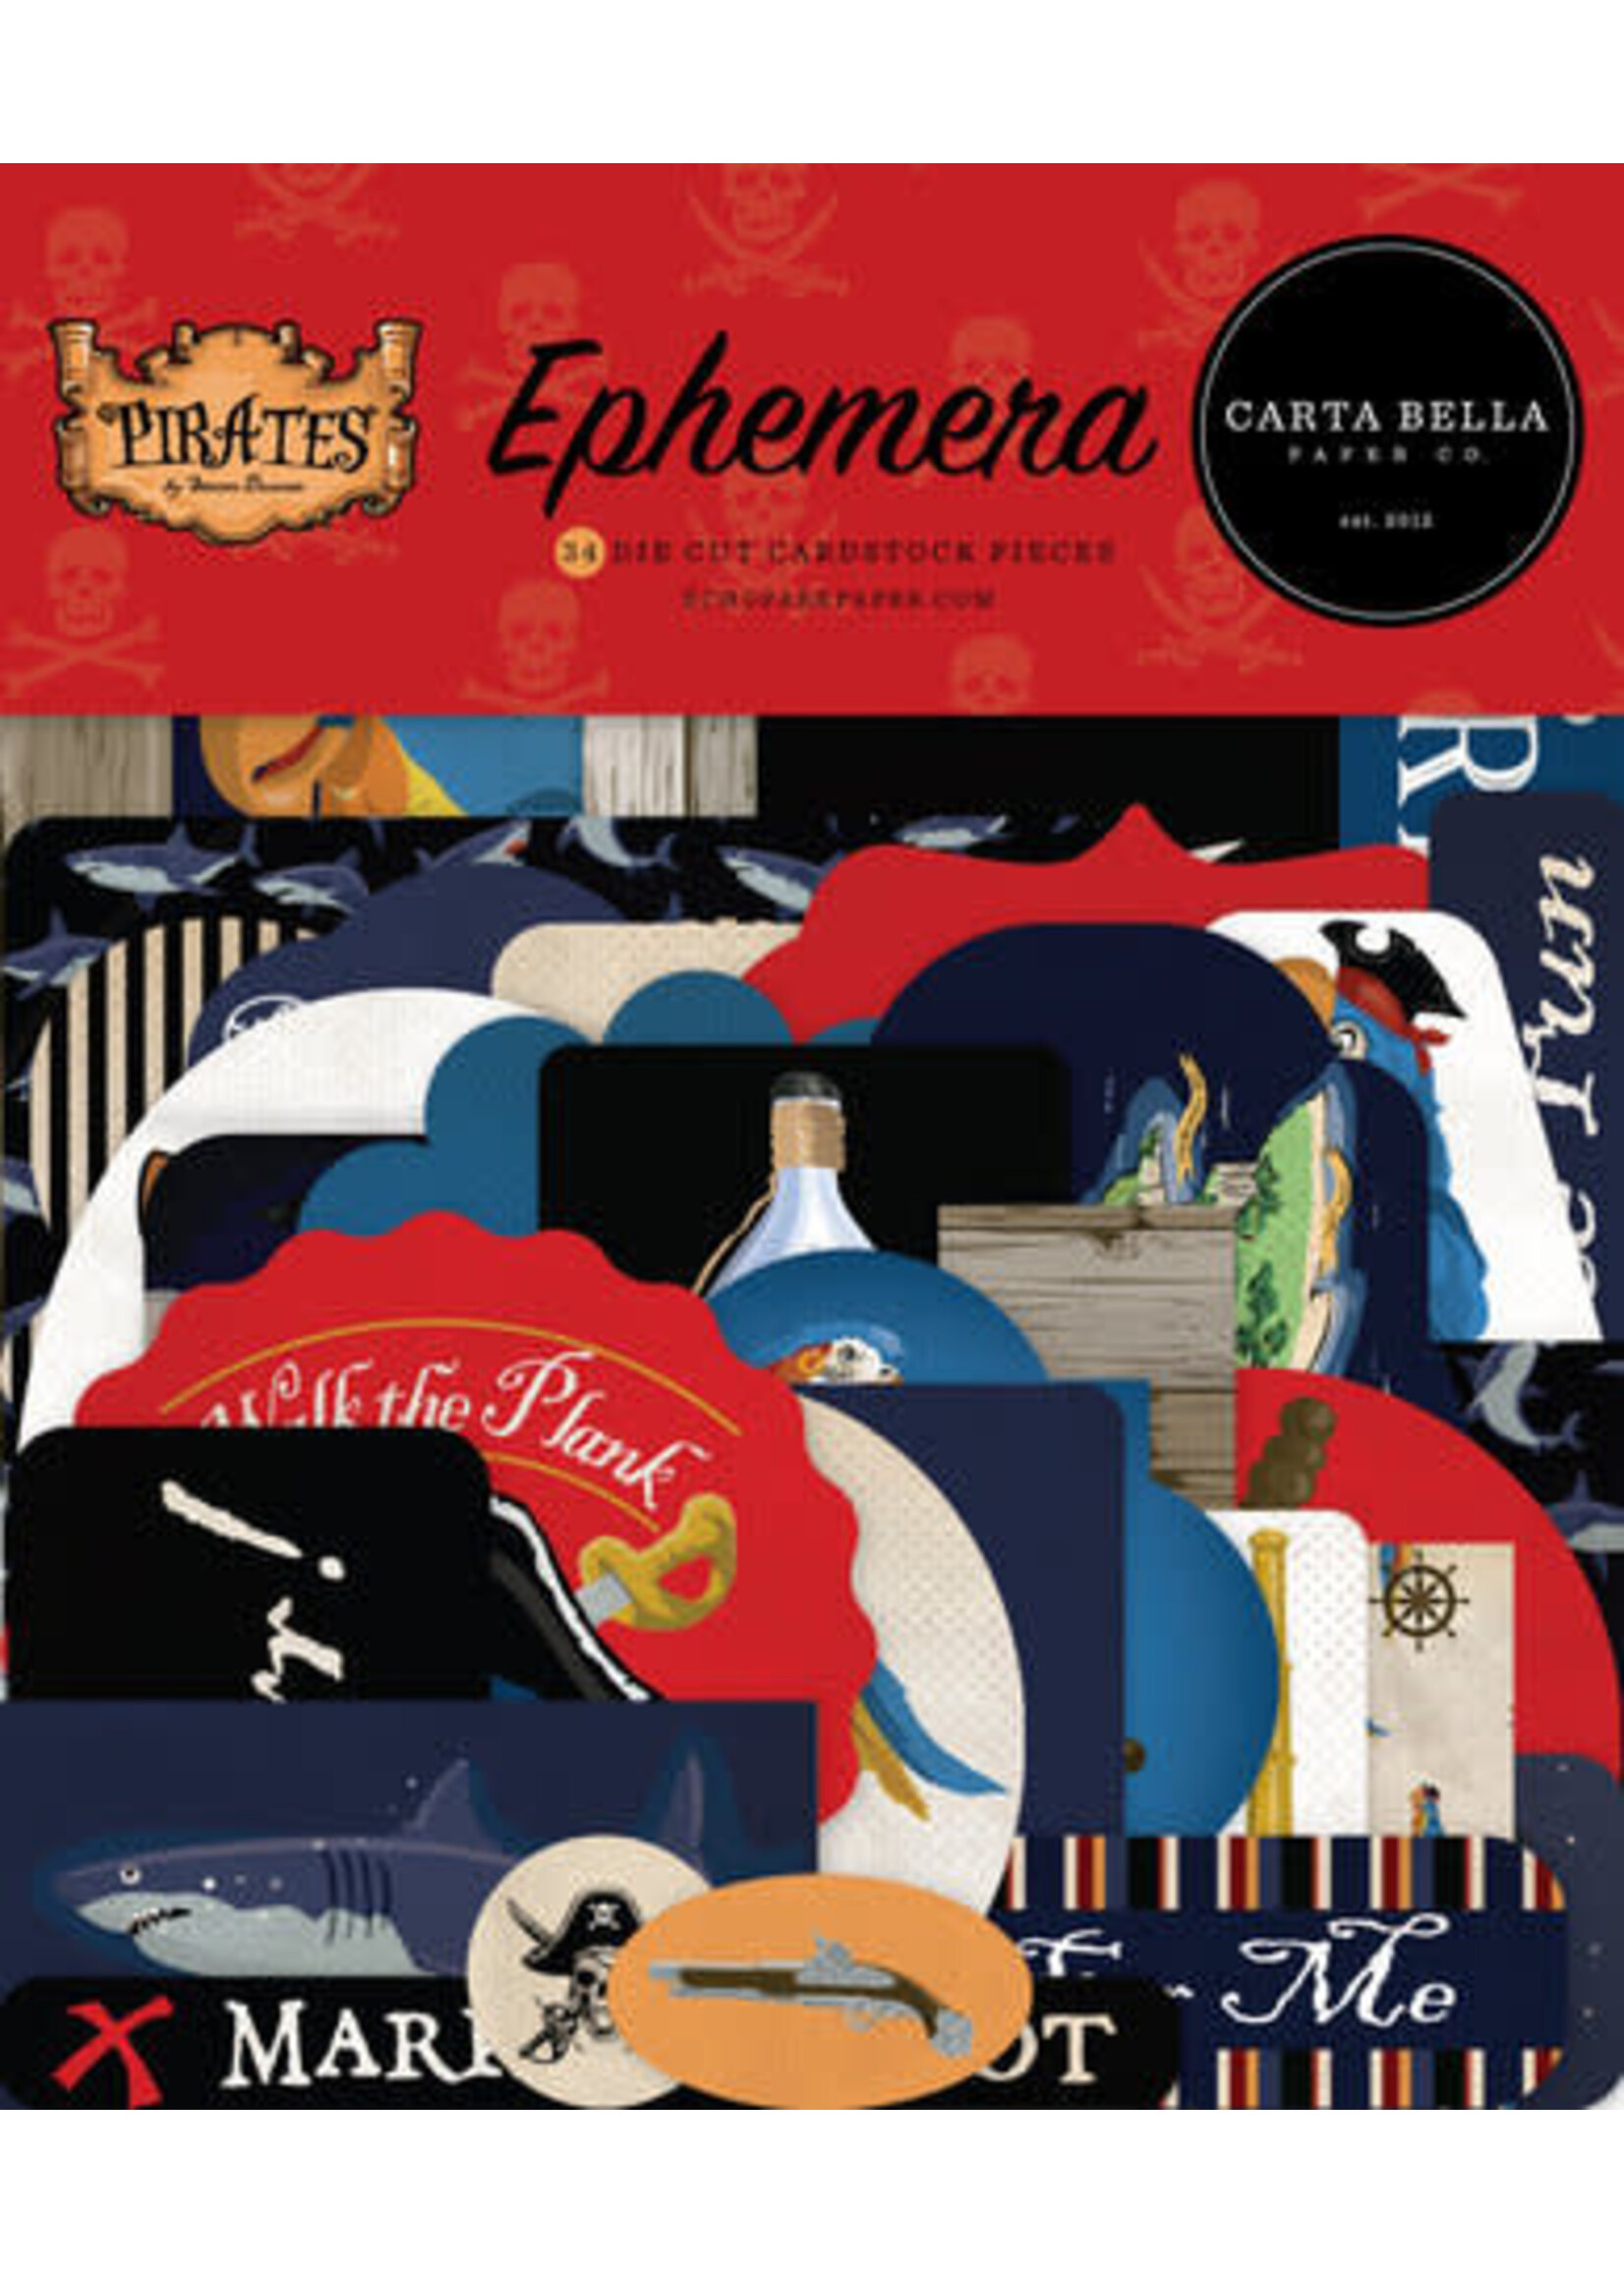 Carta Bella Pirates Ephemera (CBPT318024)